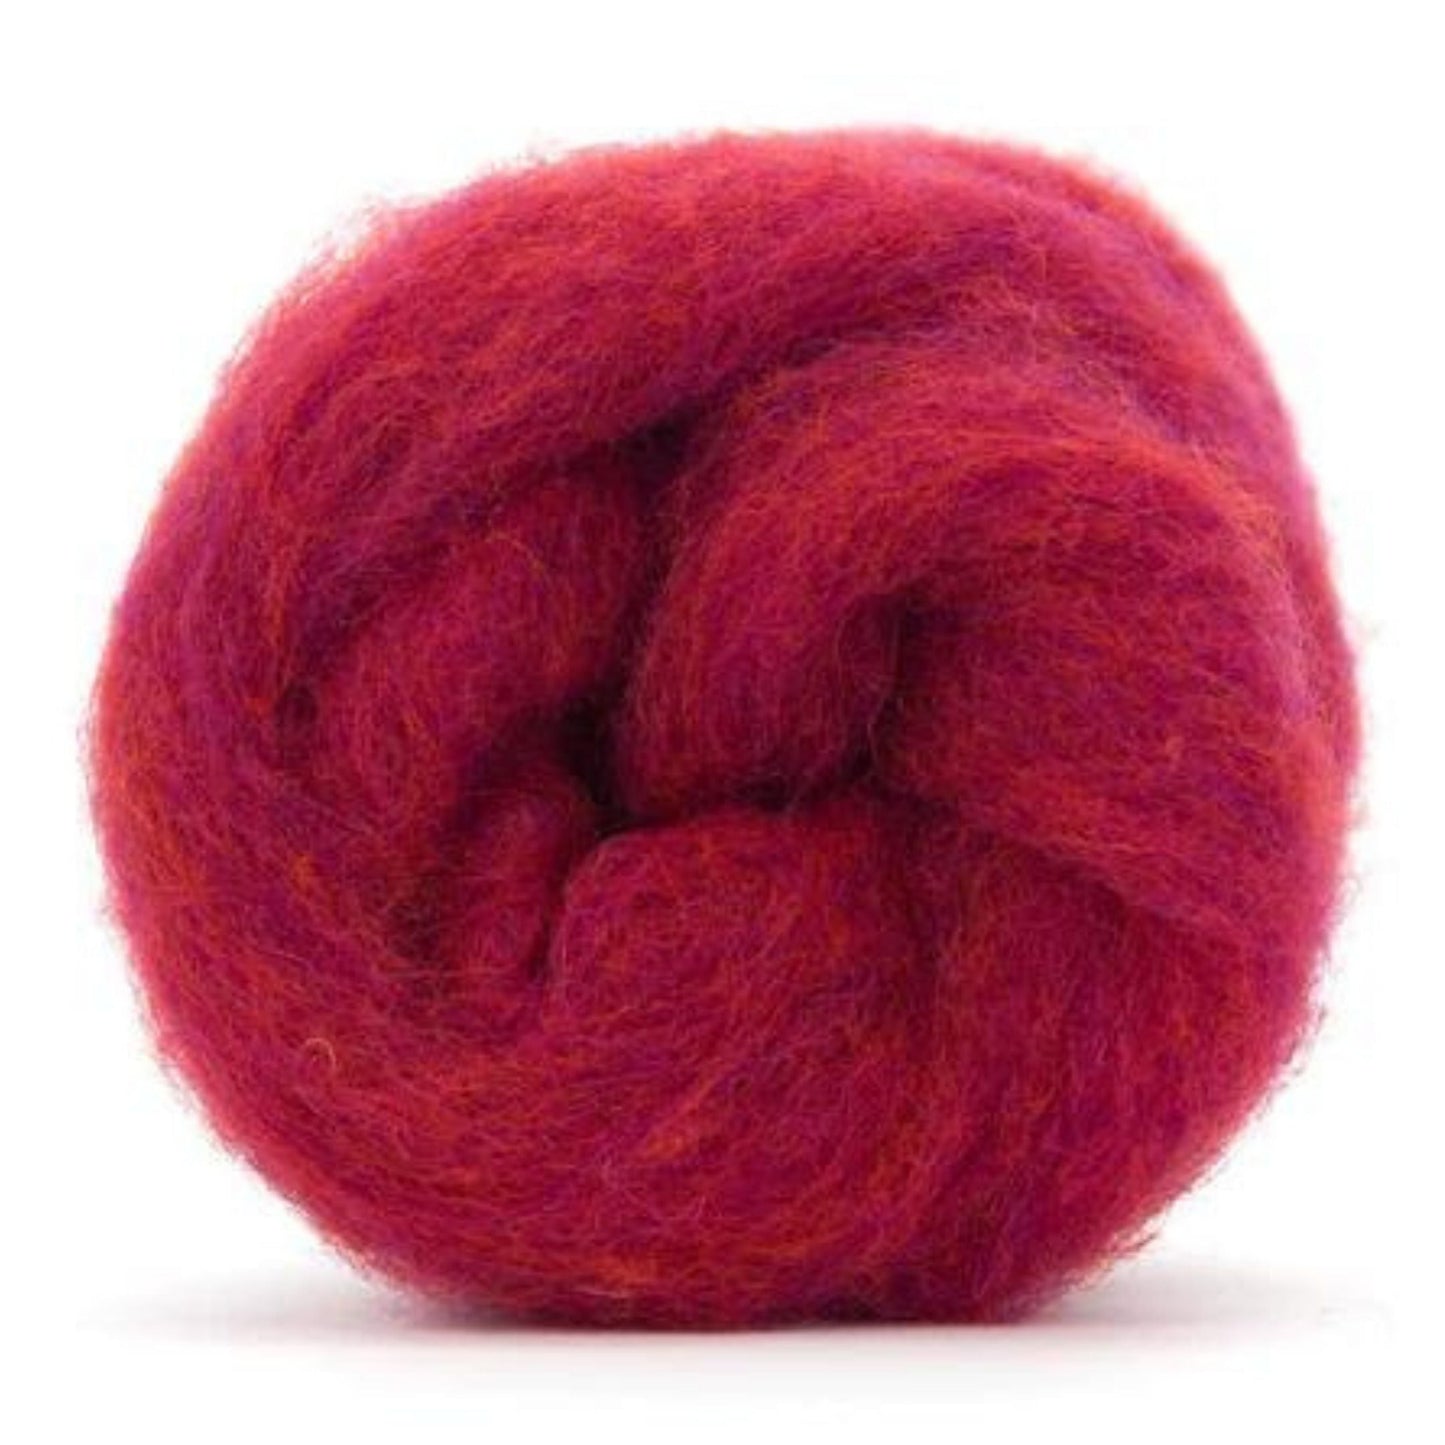 Frutti Looped Corriedale Wool Variety Pack | 8 Wondrous Colorways of Corriedale Carded Sliver Fiber